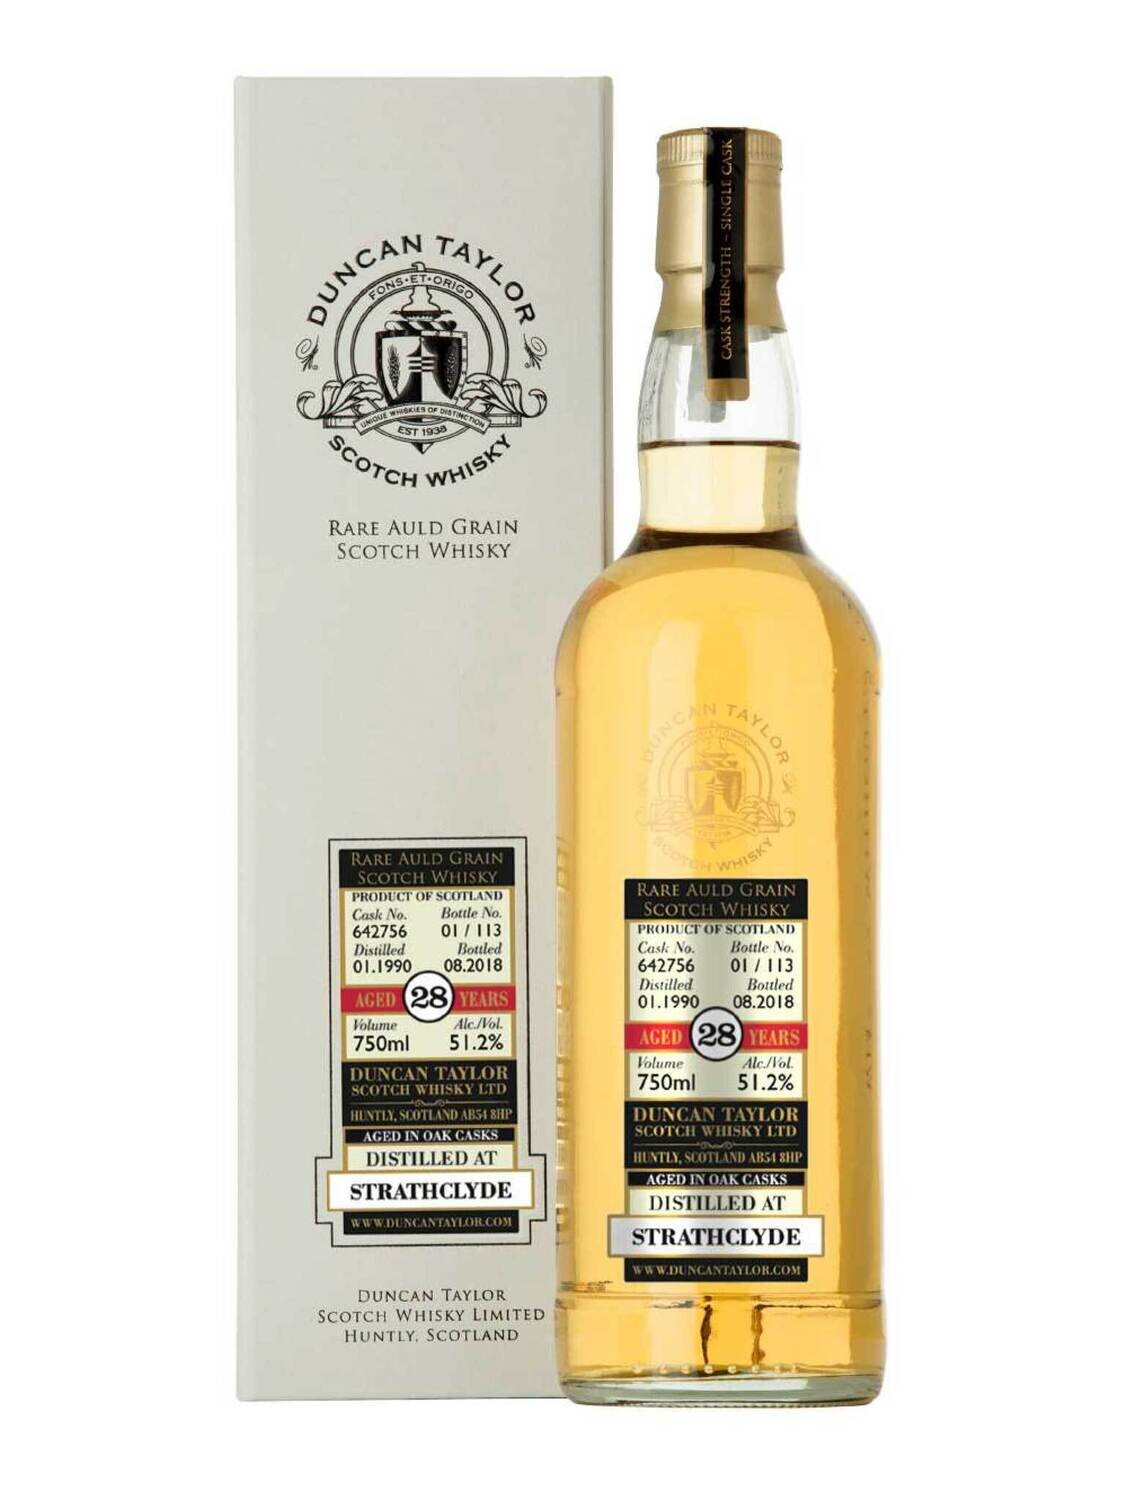 Duncan Taylor Rare Auld Grain Strathclyde 1990 28 Year Old Scotch Whisky Cask #642756 51.2% ABV 750mL